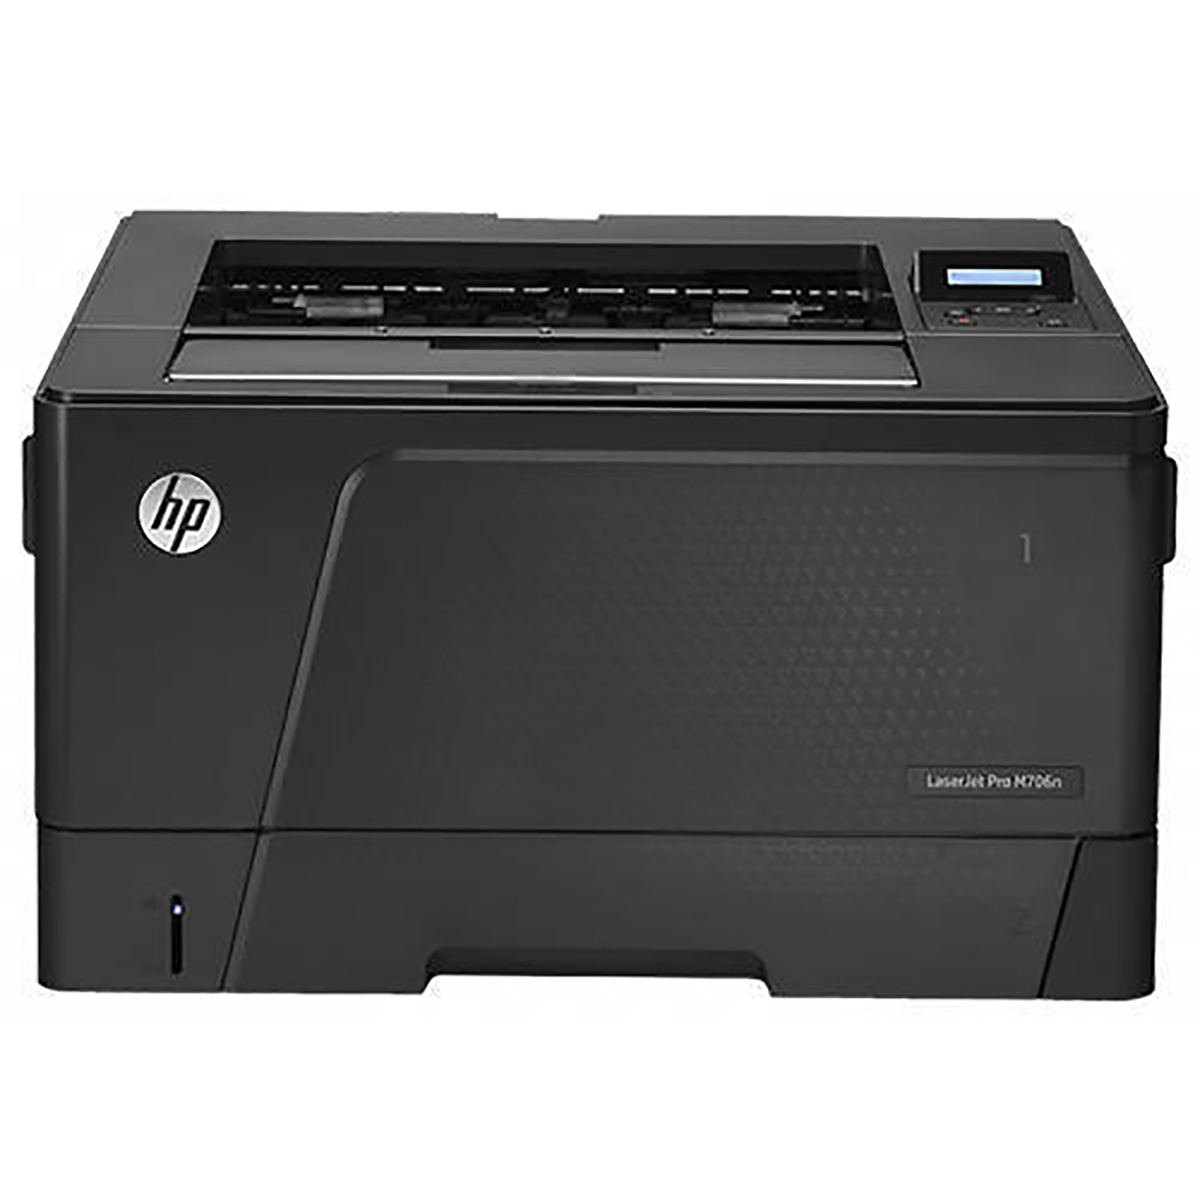 HP LaserJet Pro M706n Single Function Mono Laser Printer